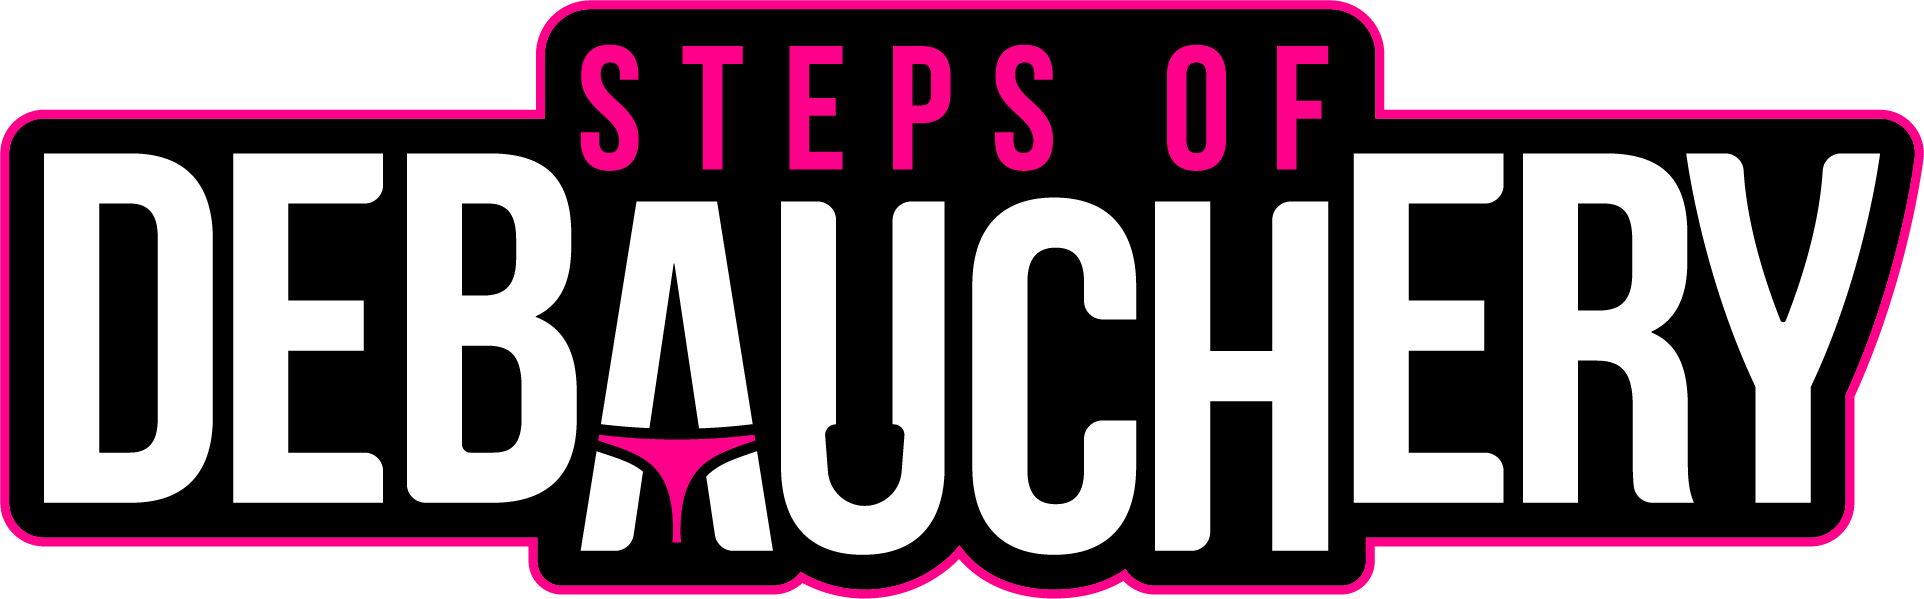 Steps of Debauchery logo